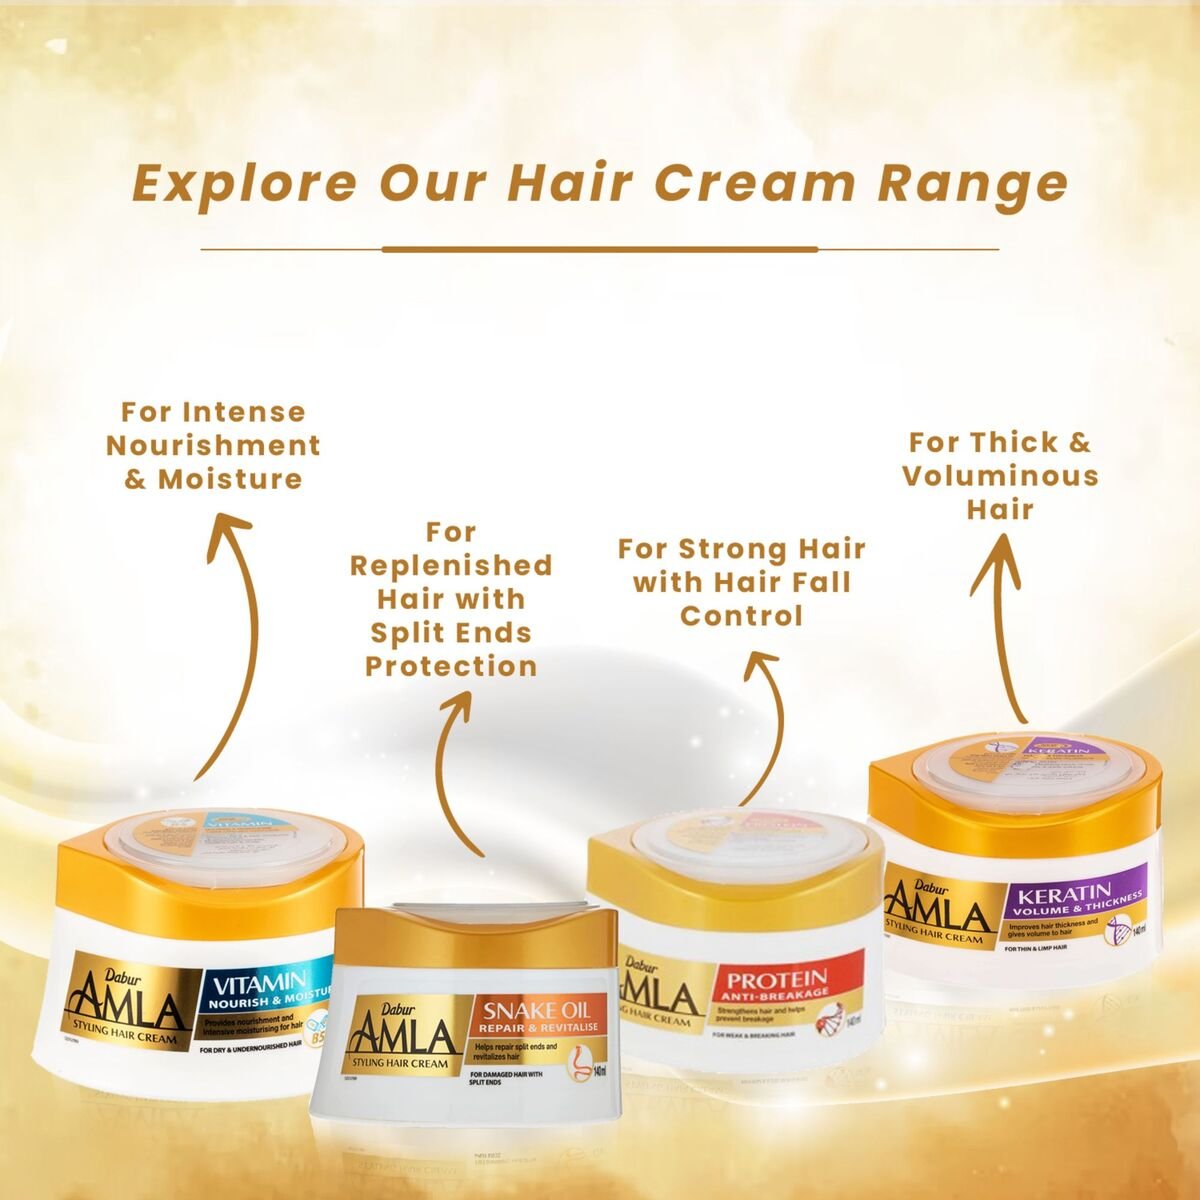 Dabur Amla Protein Styling Hair Cream 140 ml